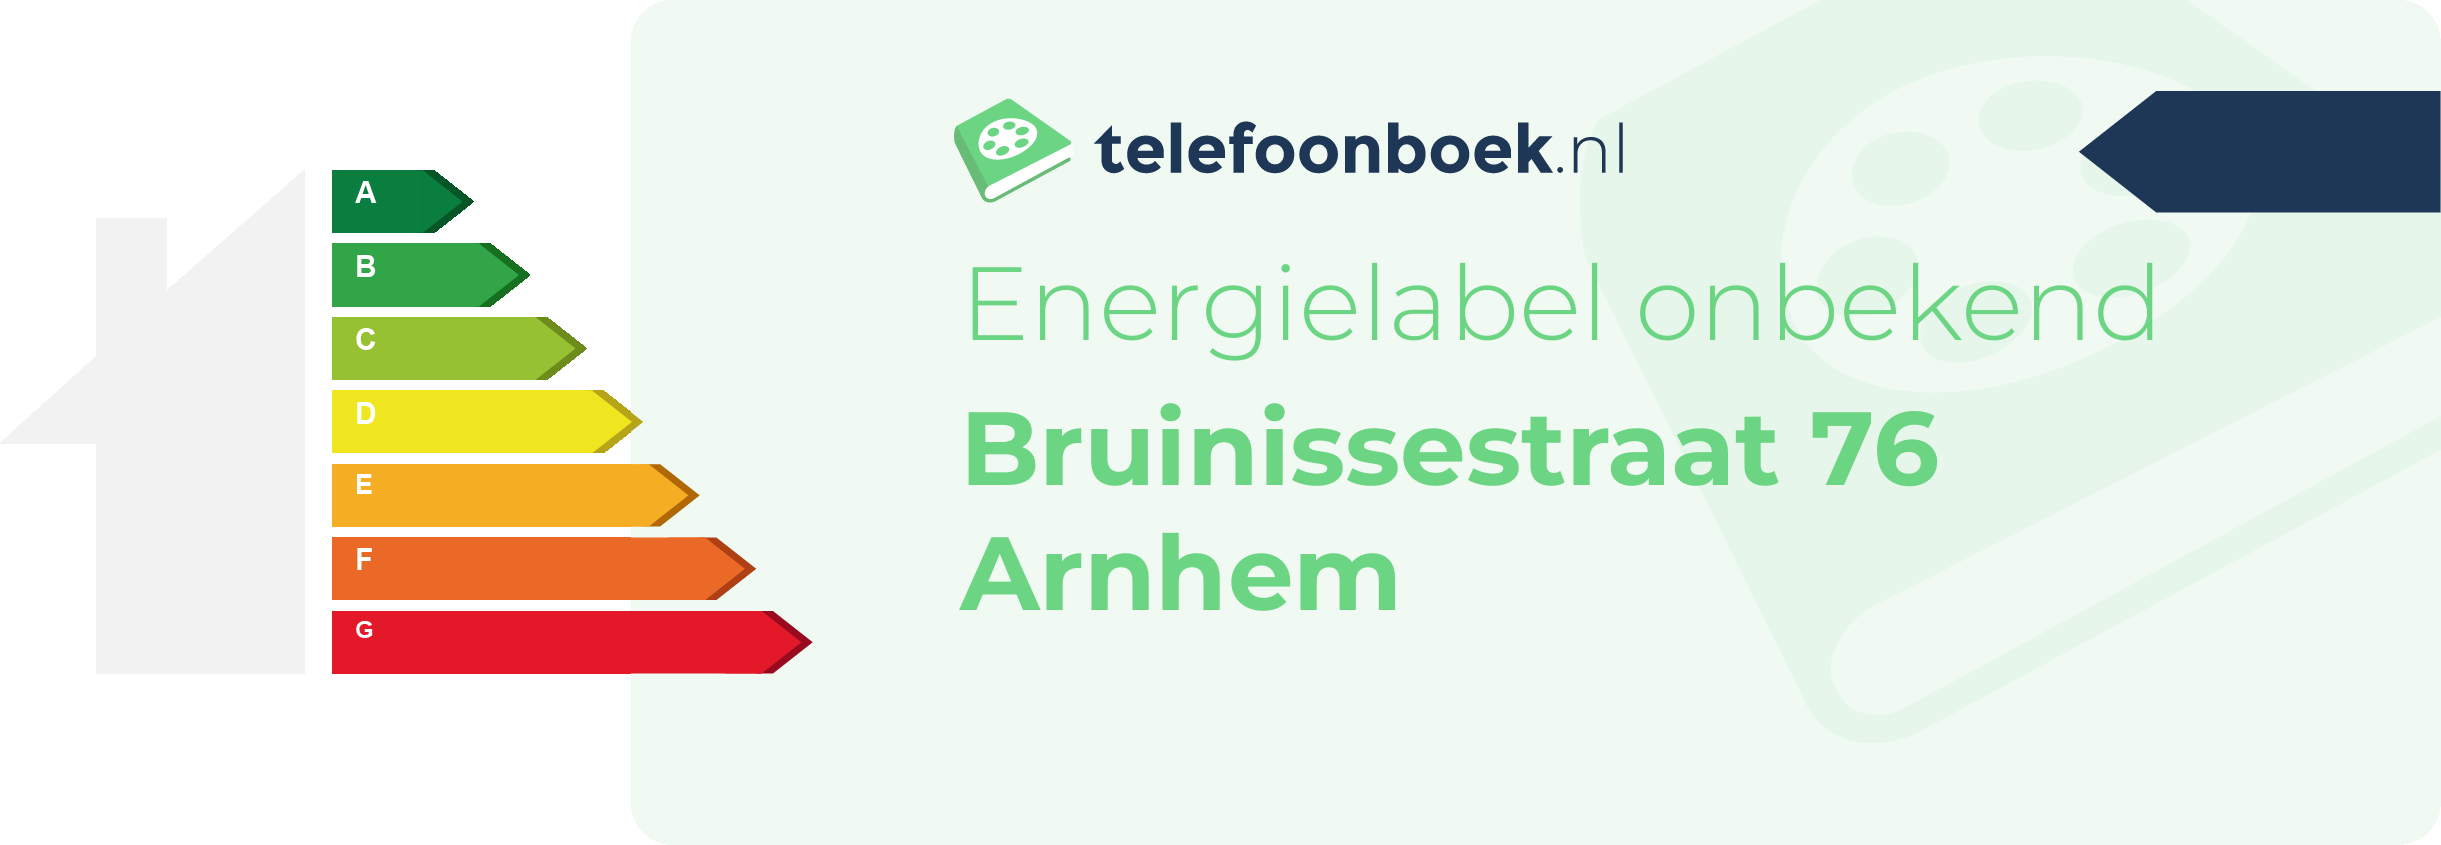 Energielabel Bruinissestraat 76 Arnhem